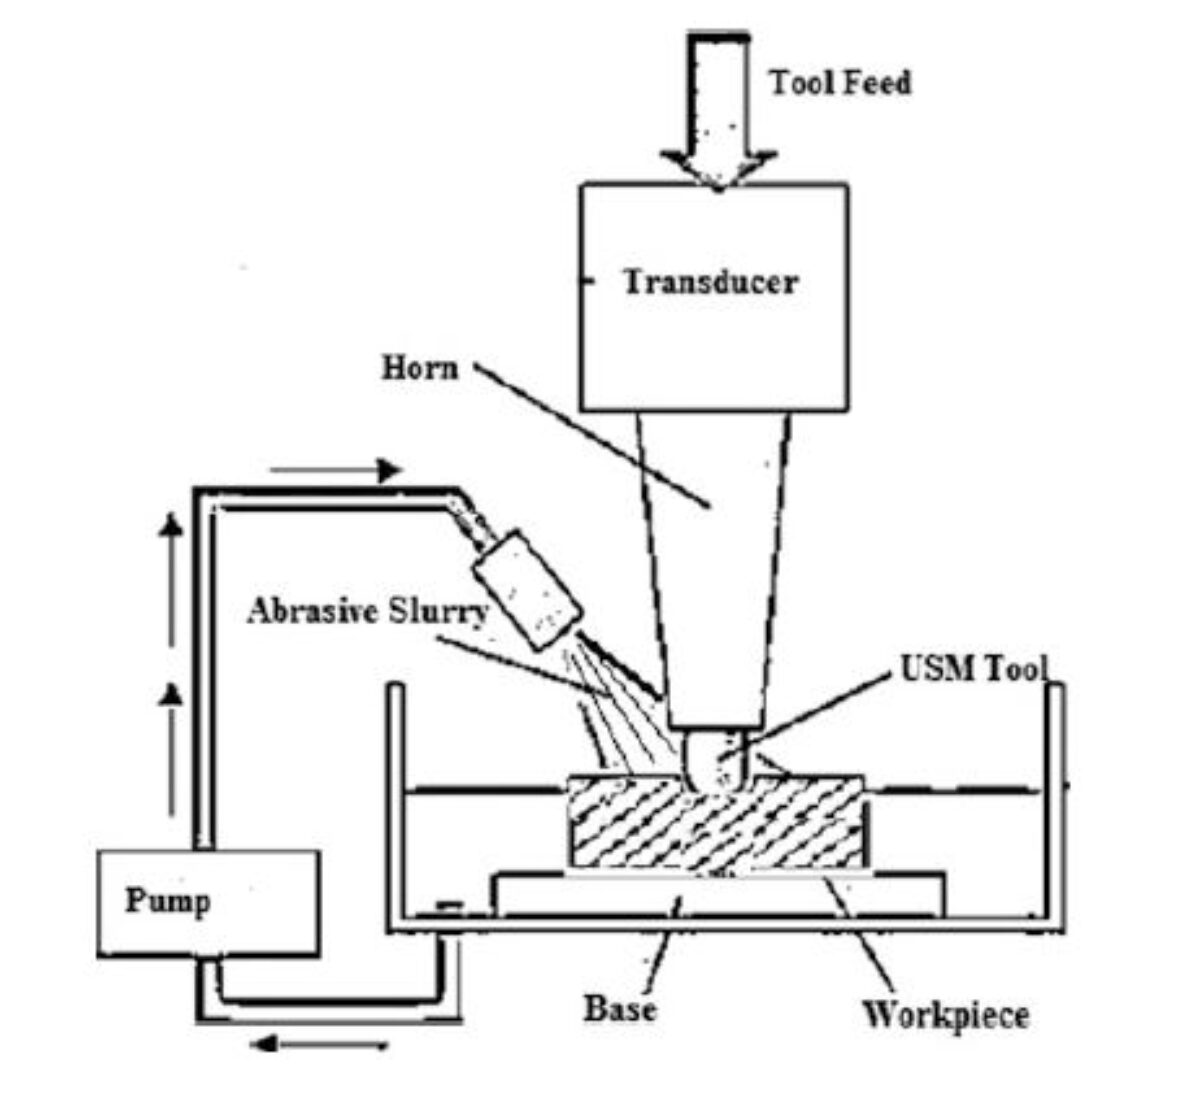 Ultrasonic Machining Process working in manufacturing